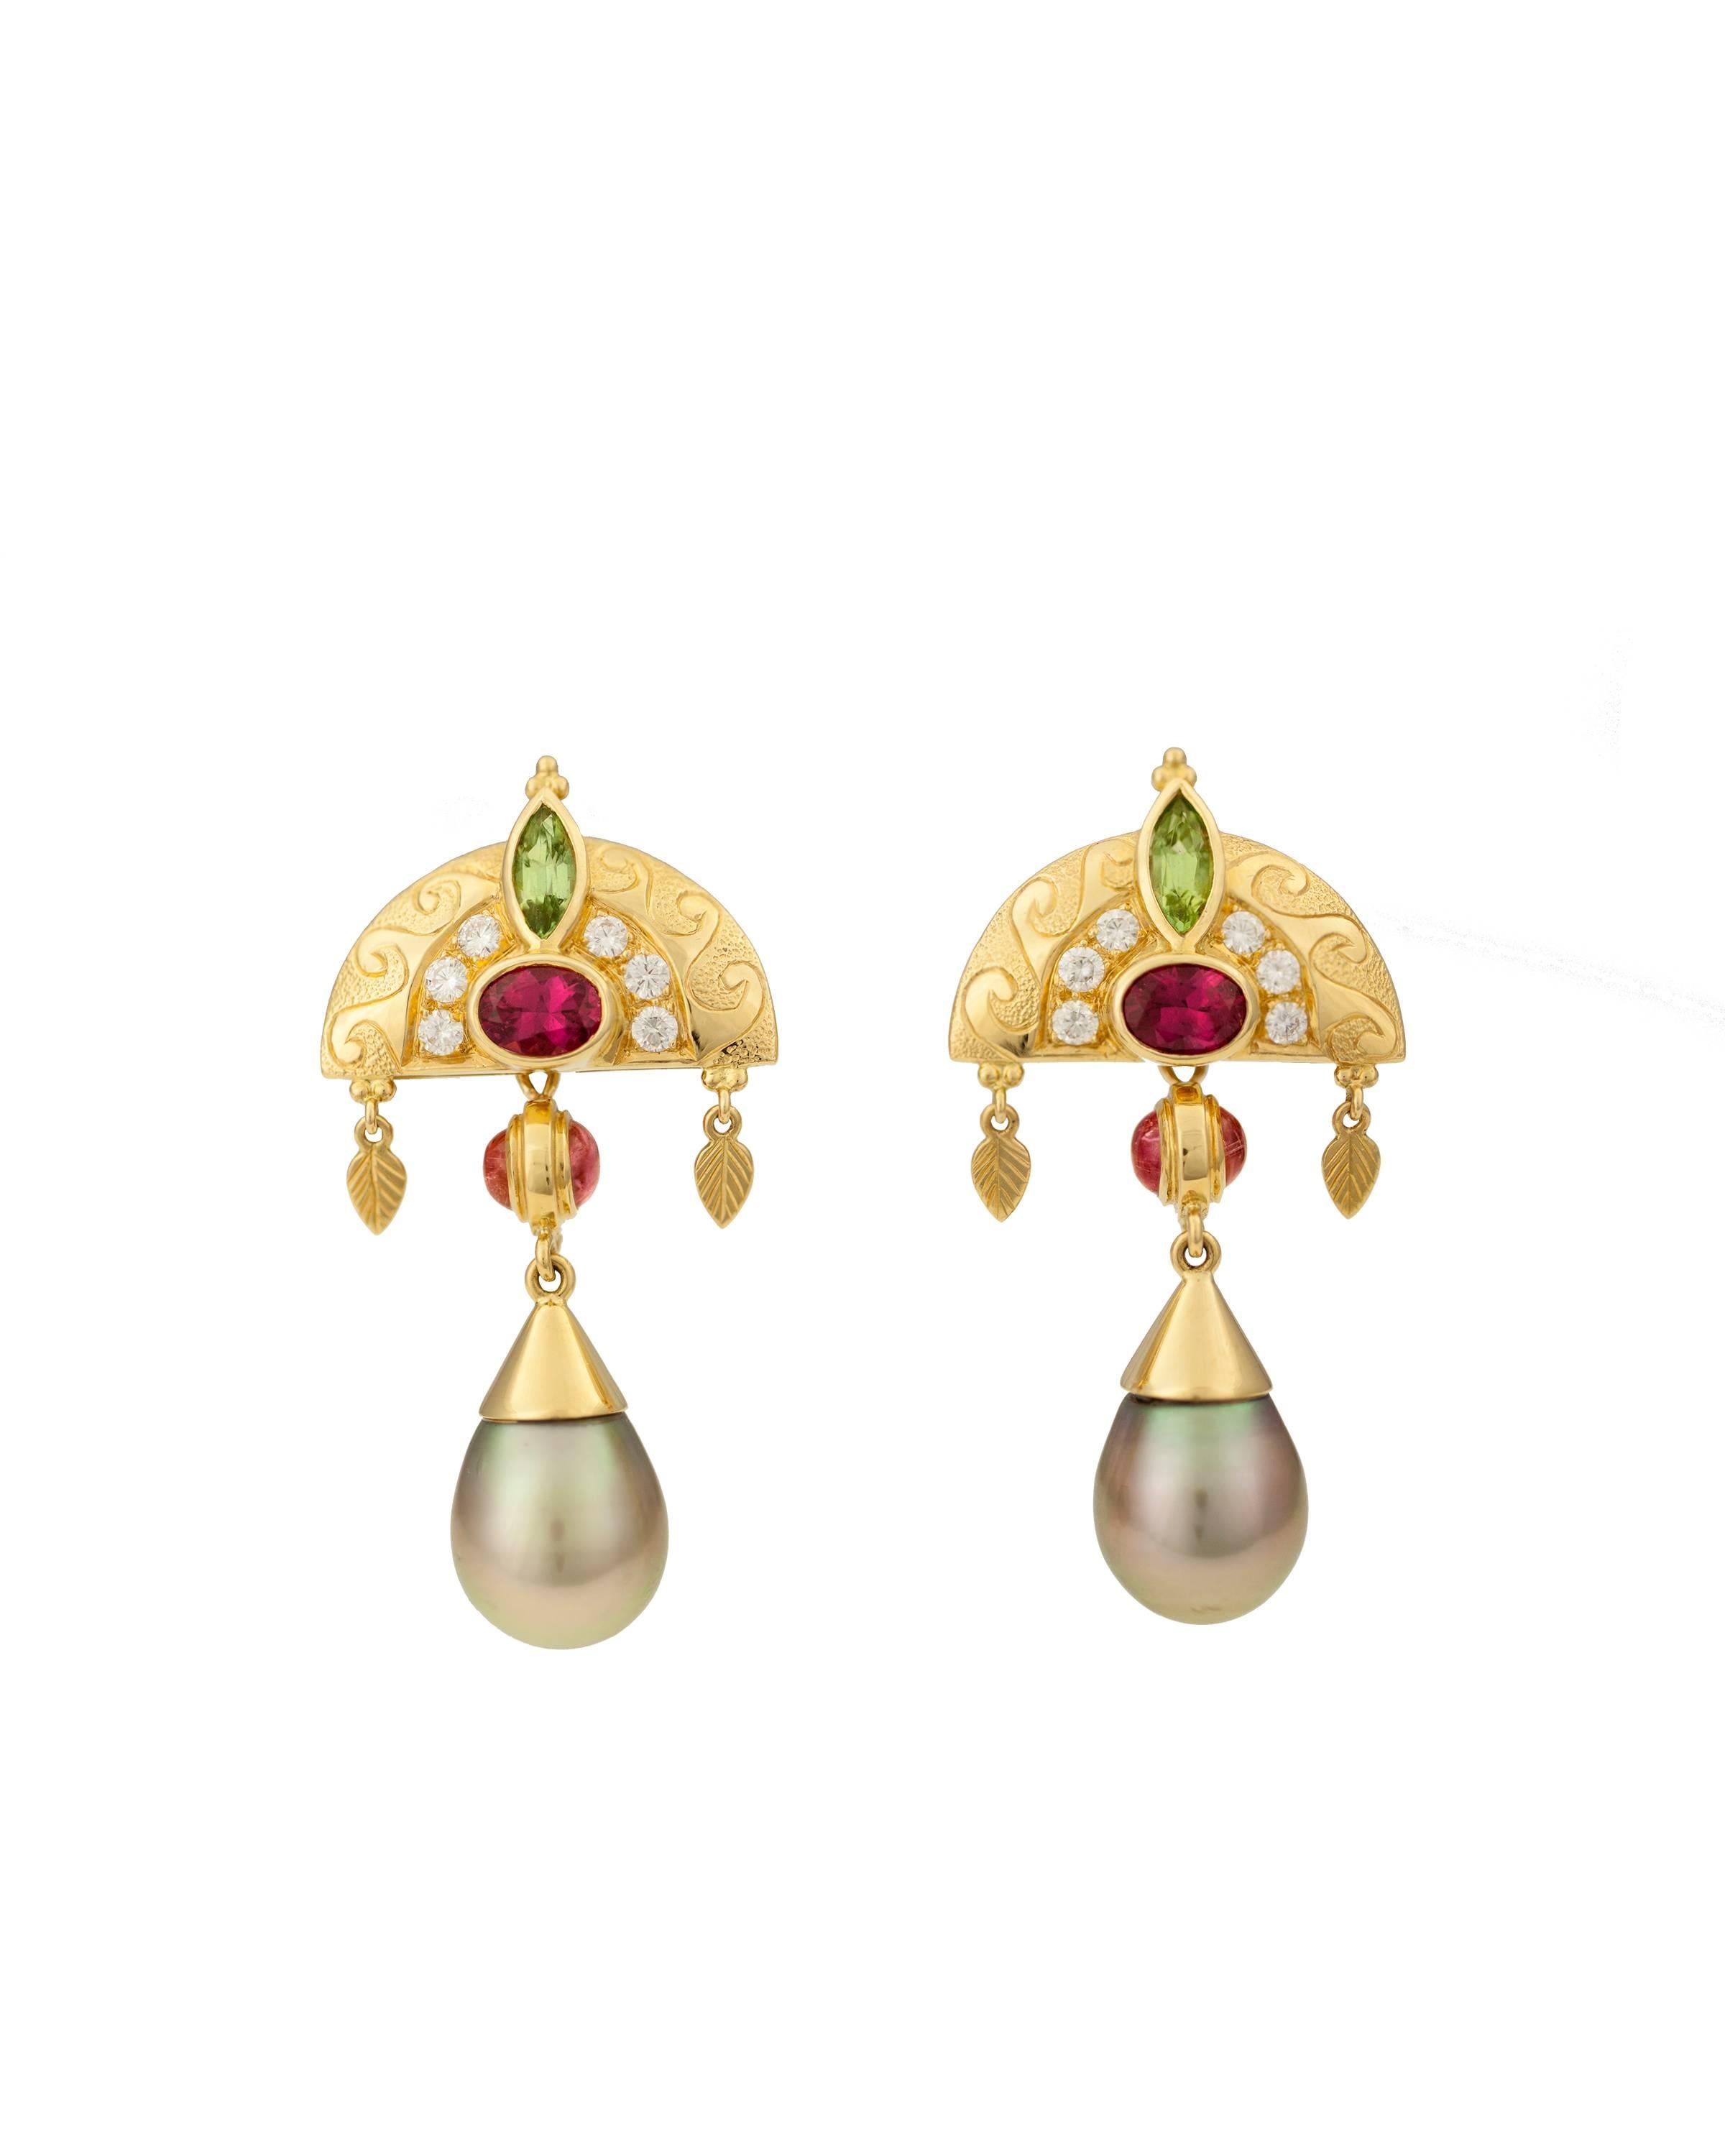 A beautiful hand made pair of Crevoshay pearl, tourmaline and diamond earrings.

Tourmaline oval = 1.45ct. 